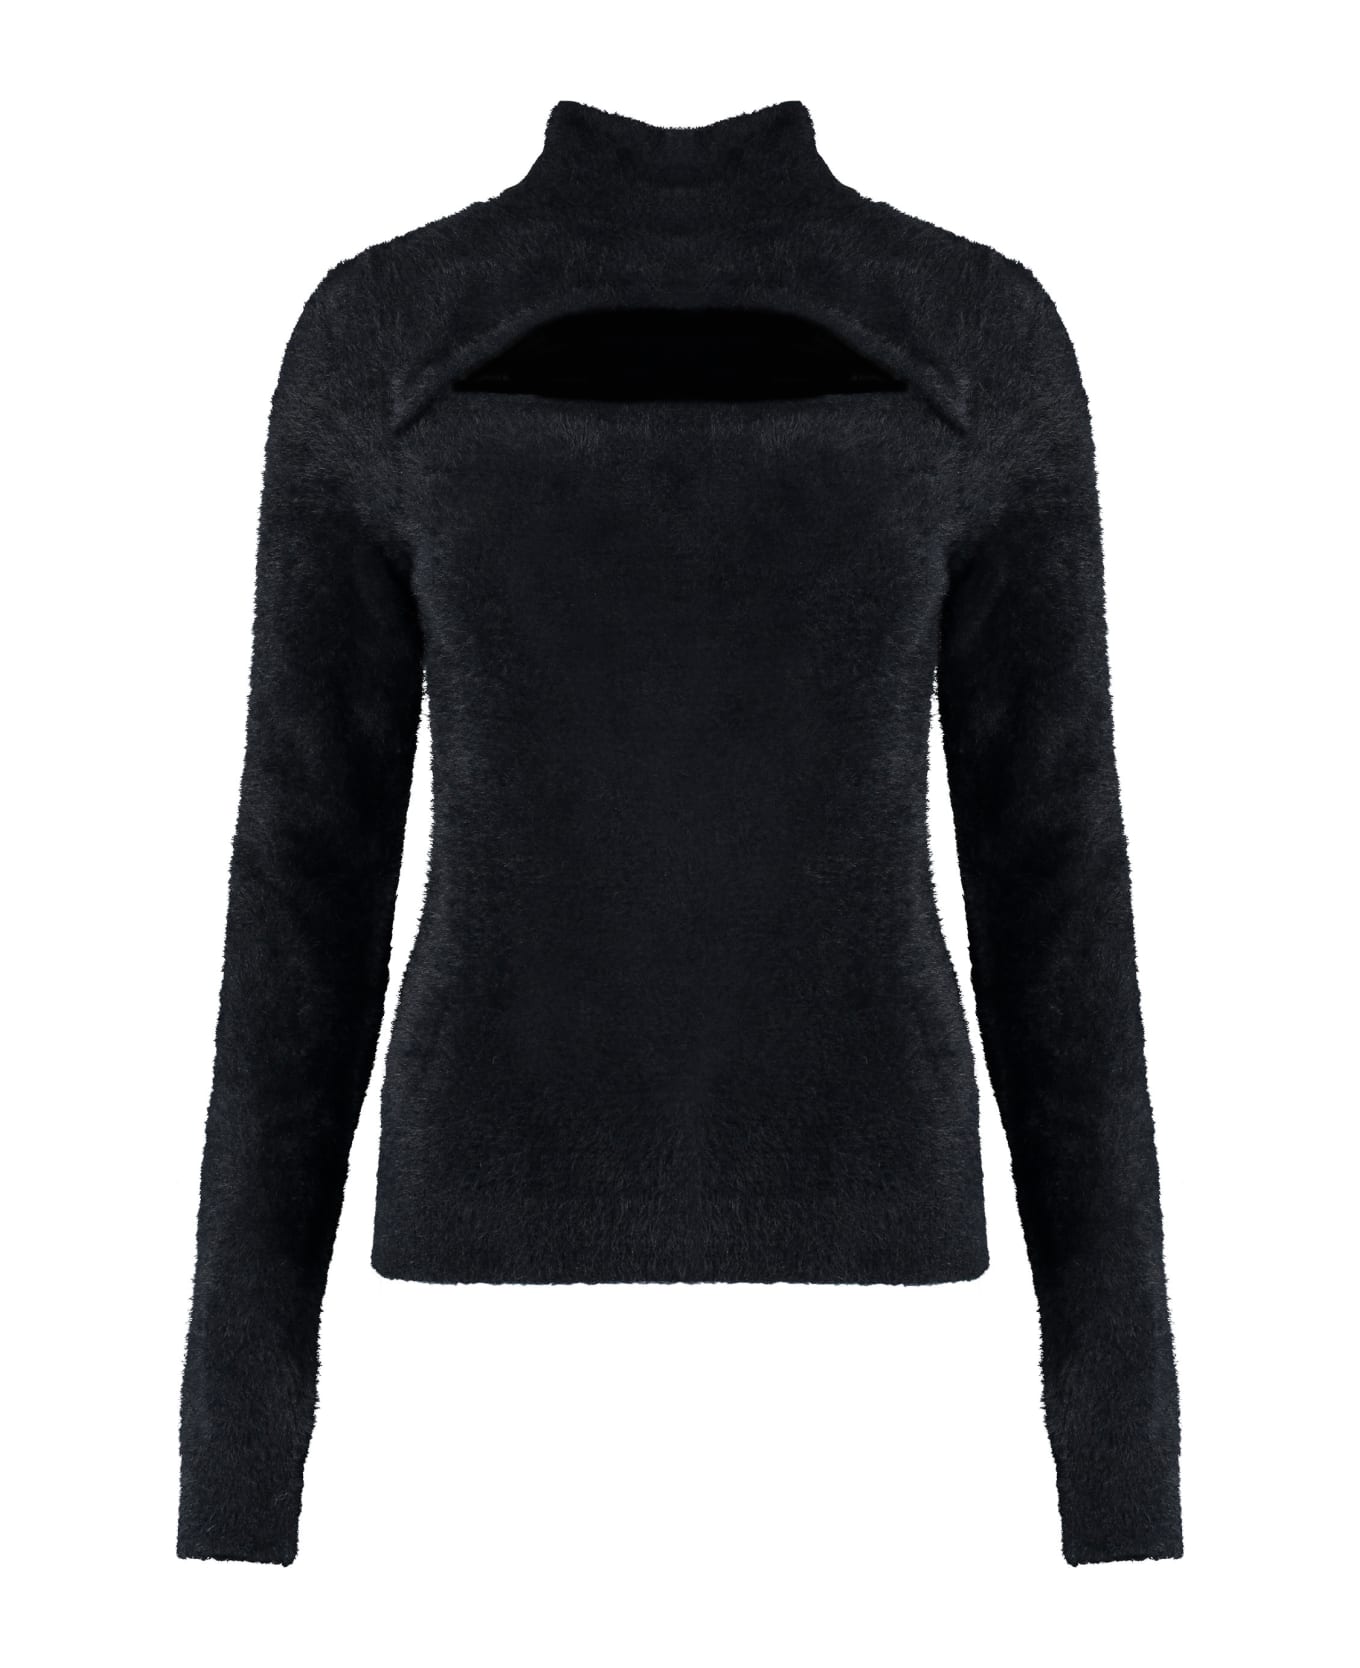 Marant Étoile Mayers Turtleneck Sweater - black